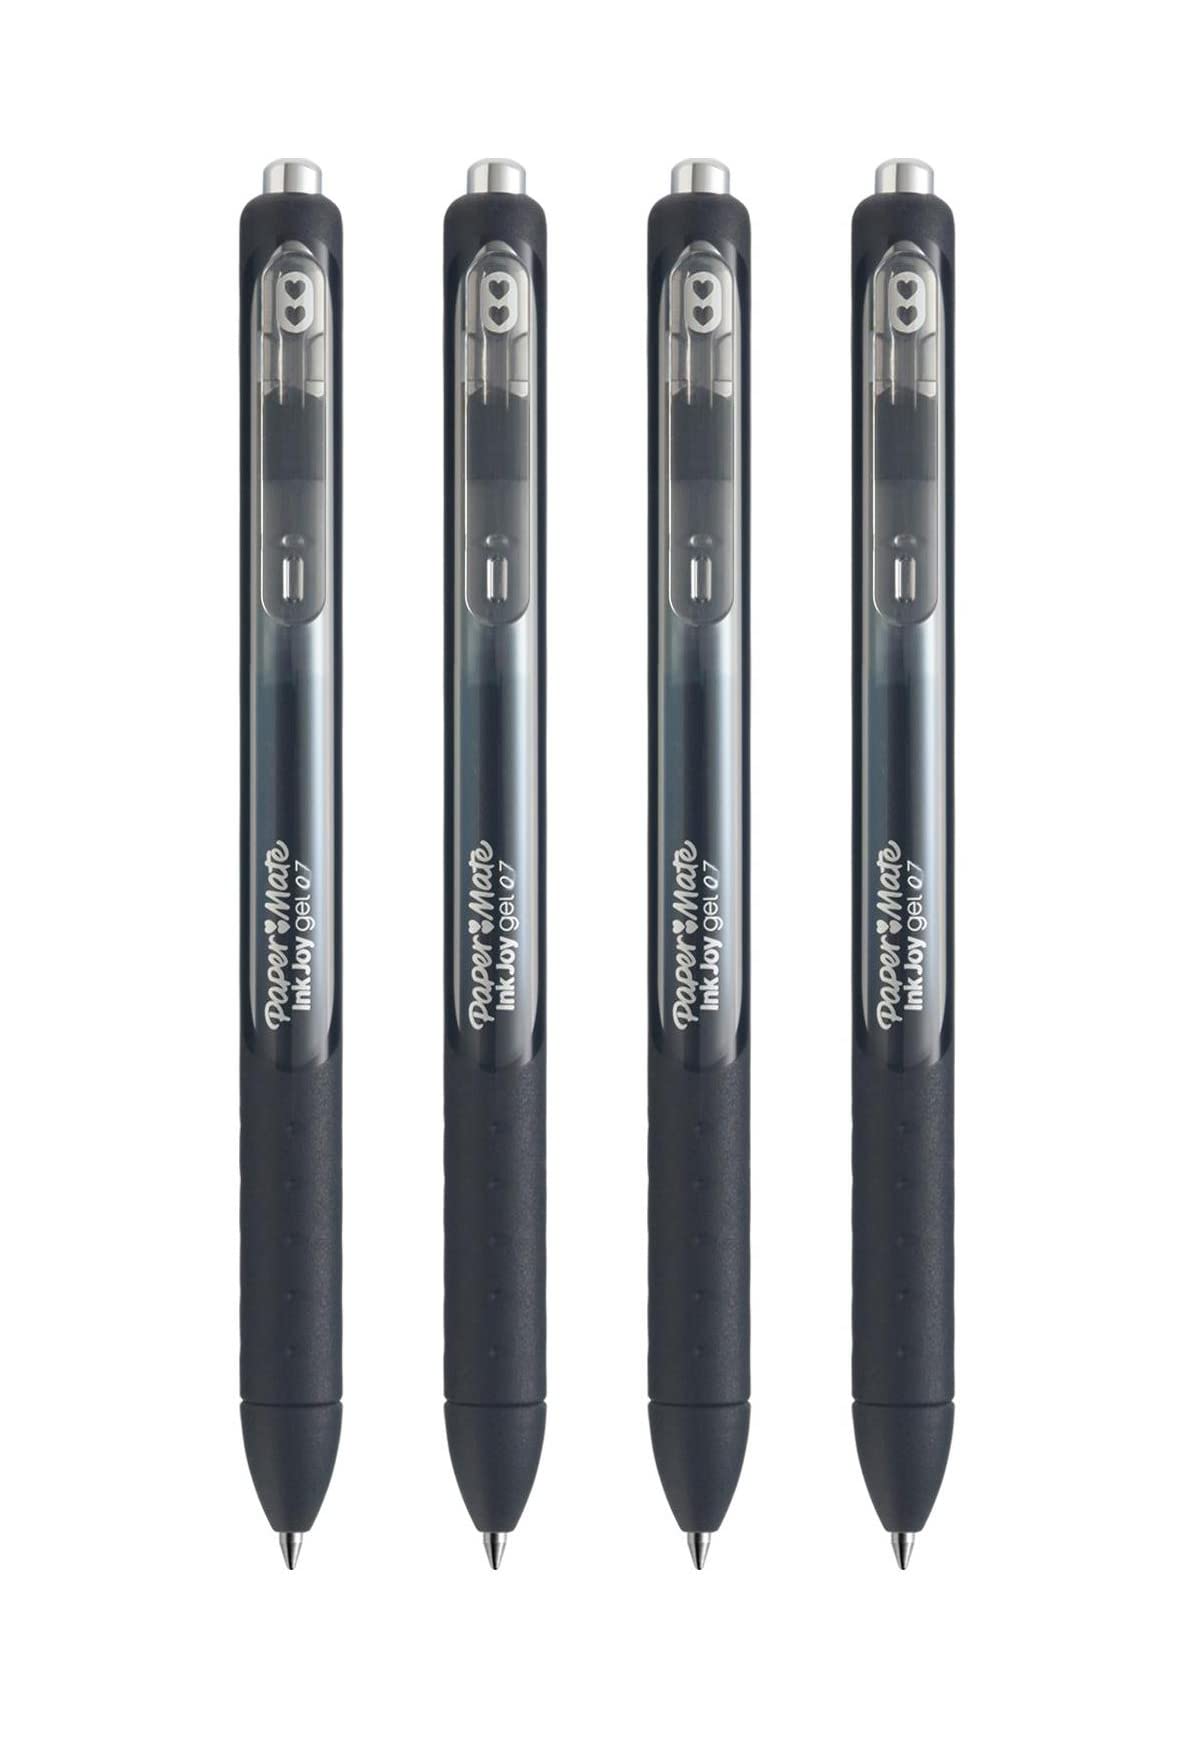 Paper Mate InkJoy Gel Retractable Pens - 0.7mm Medium Point - Black Ink - Pack of 4